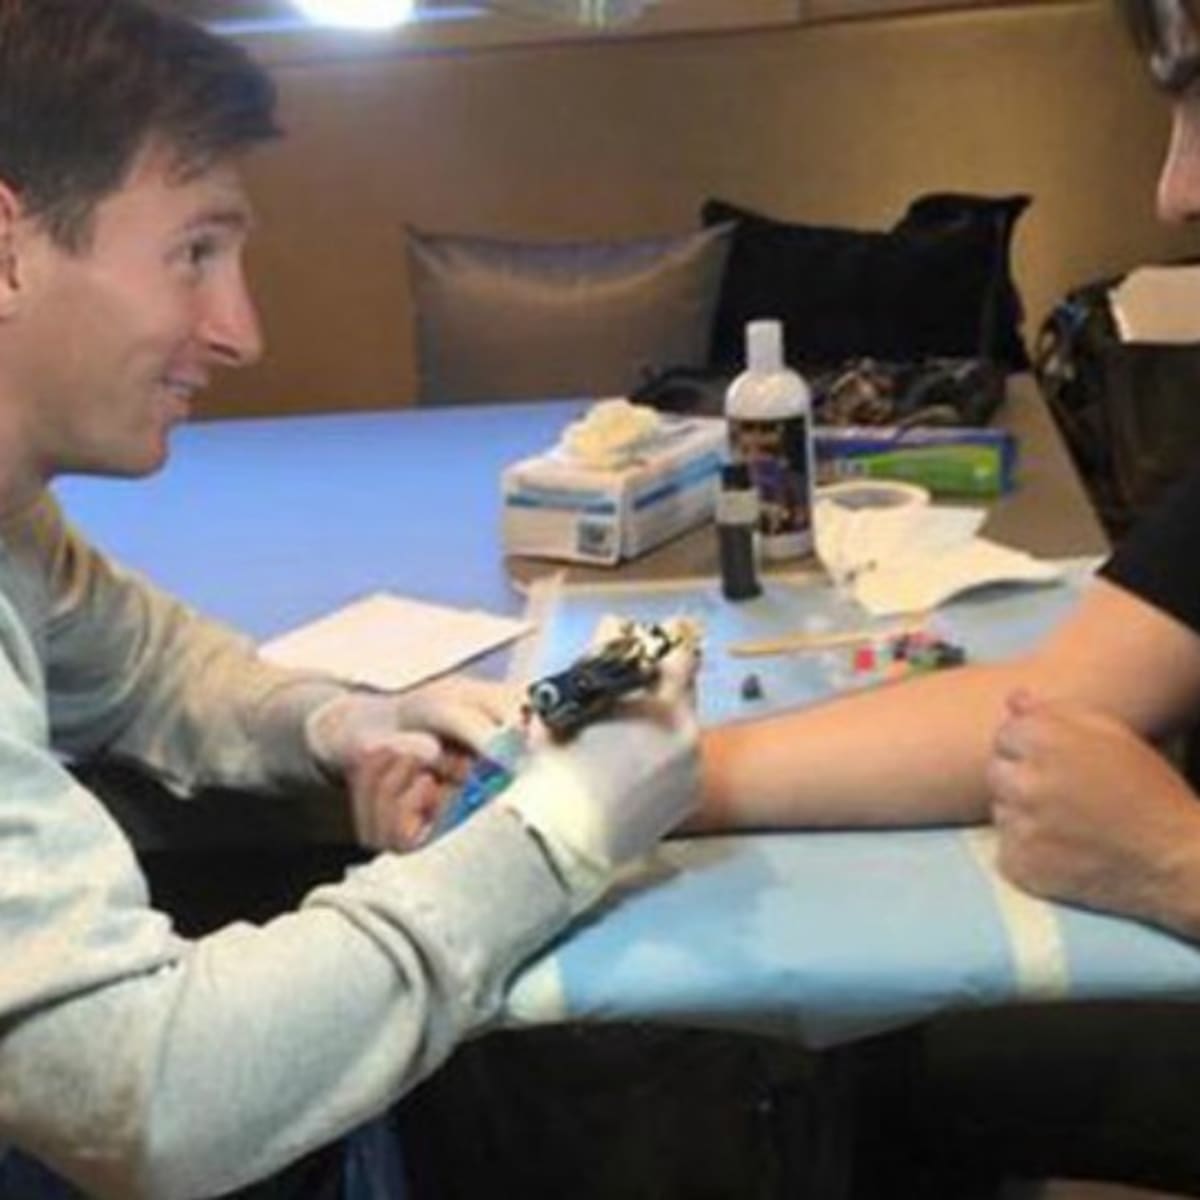 Viva Barca - Robert Lopez (Messi's tattoo artist): 